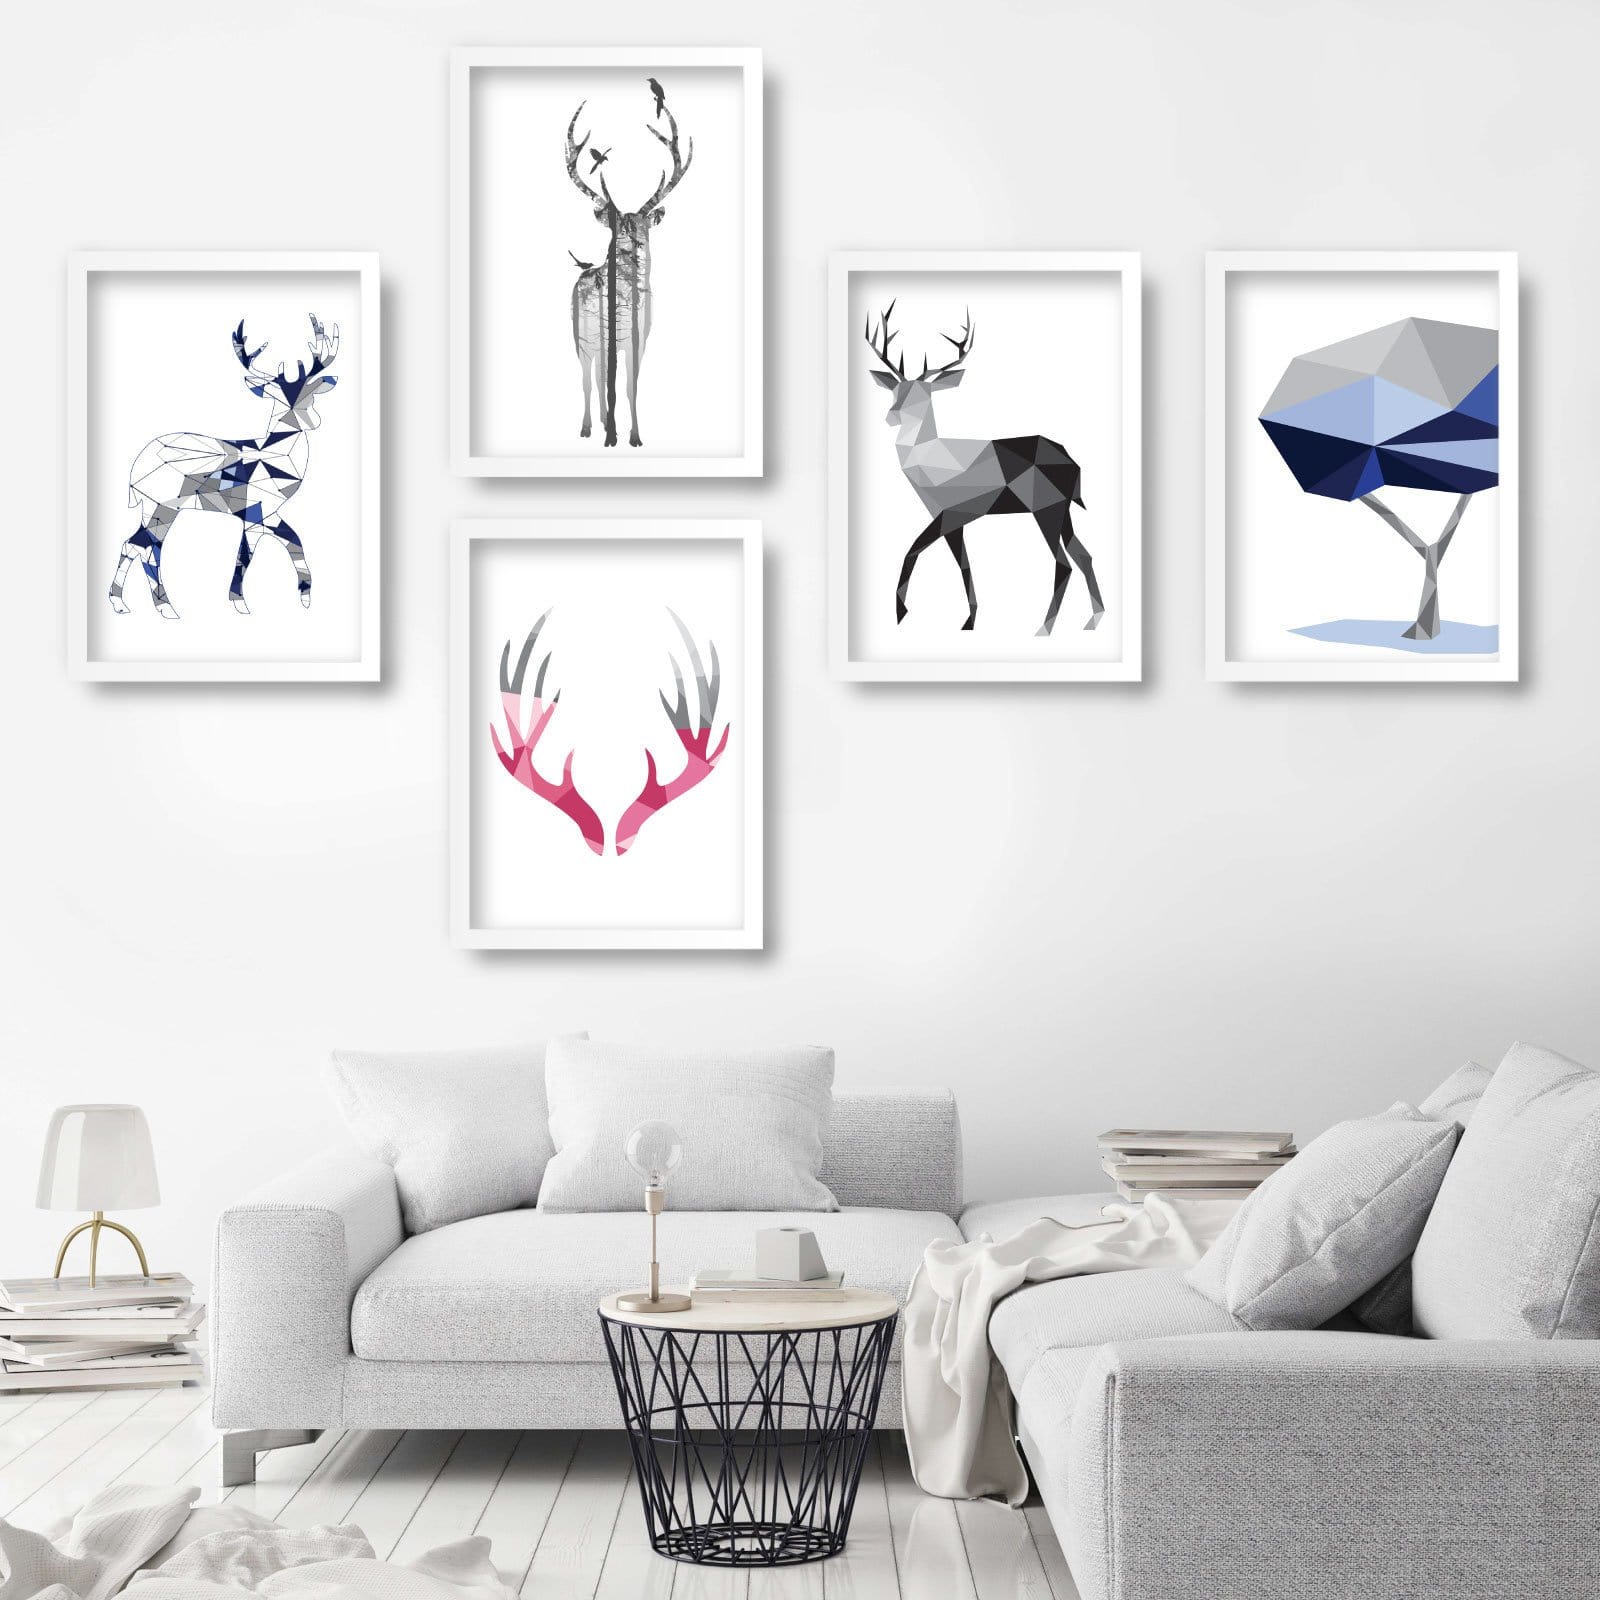 Set of 5 STAG deer Scandinavian GEOMETRIC Gallery Wall Art Prints Navy Blue, Pink & Grey Wall Pictures Posters Artwork